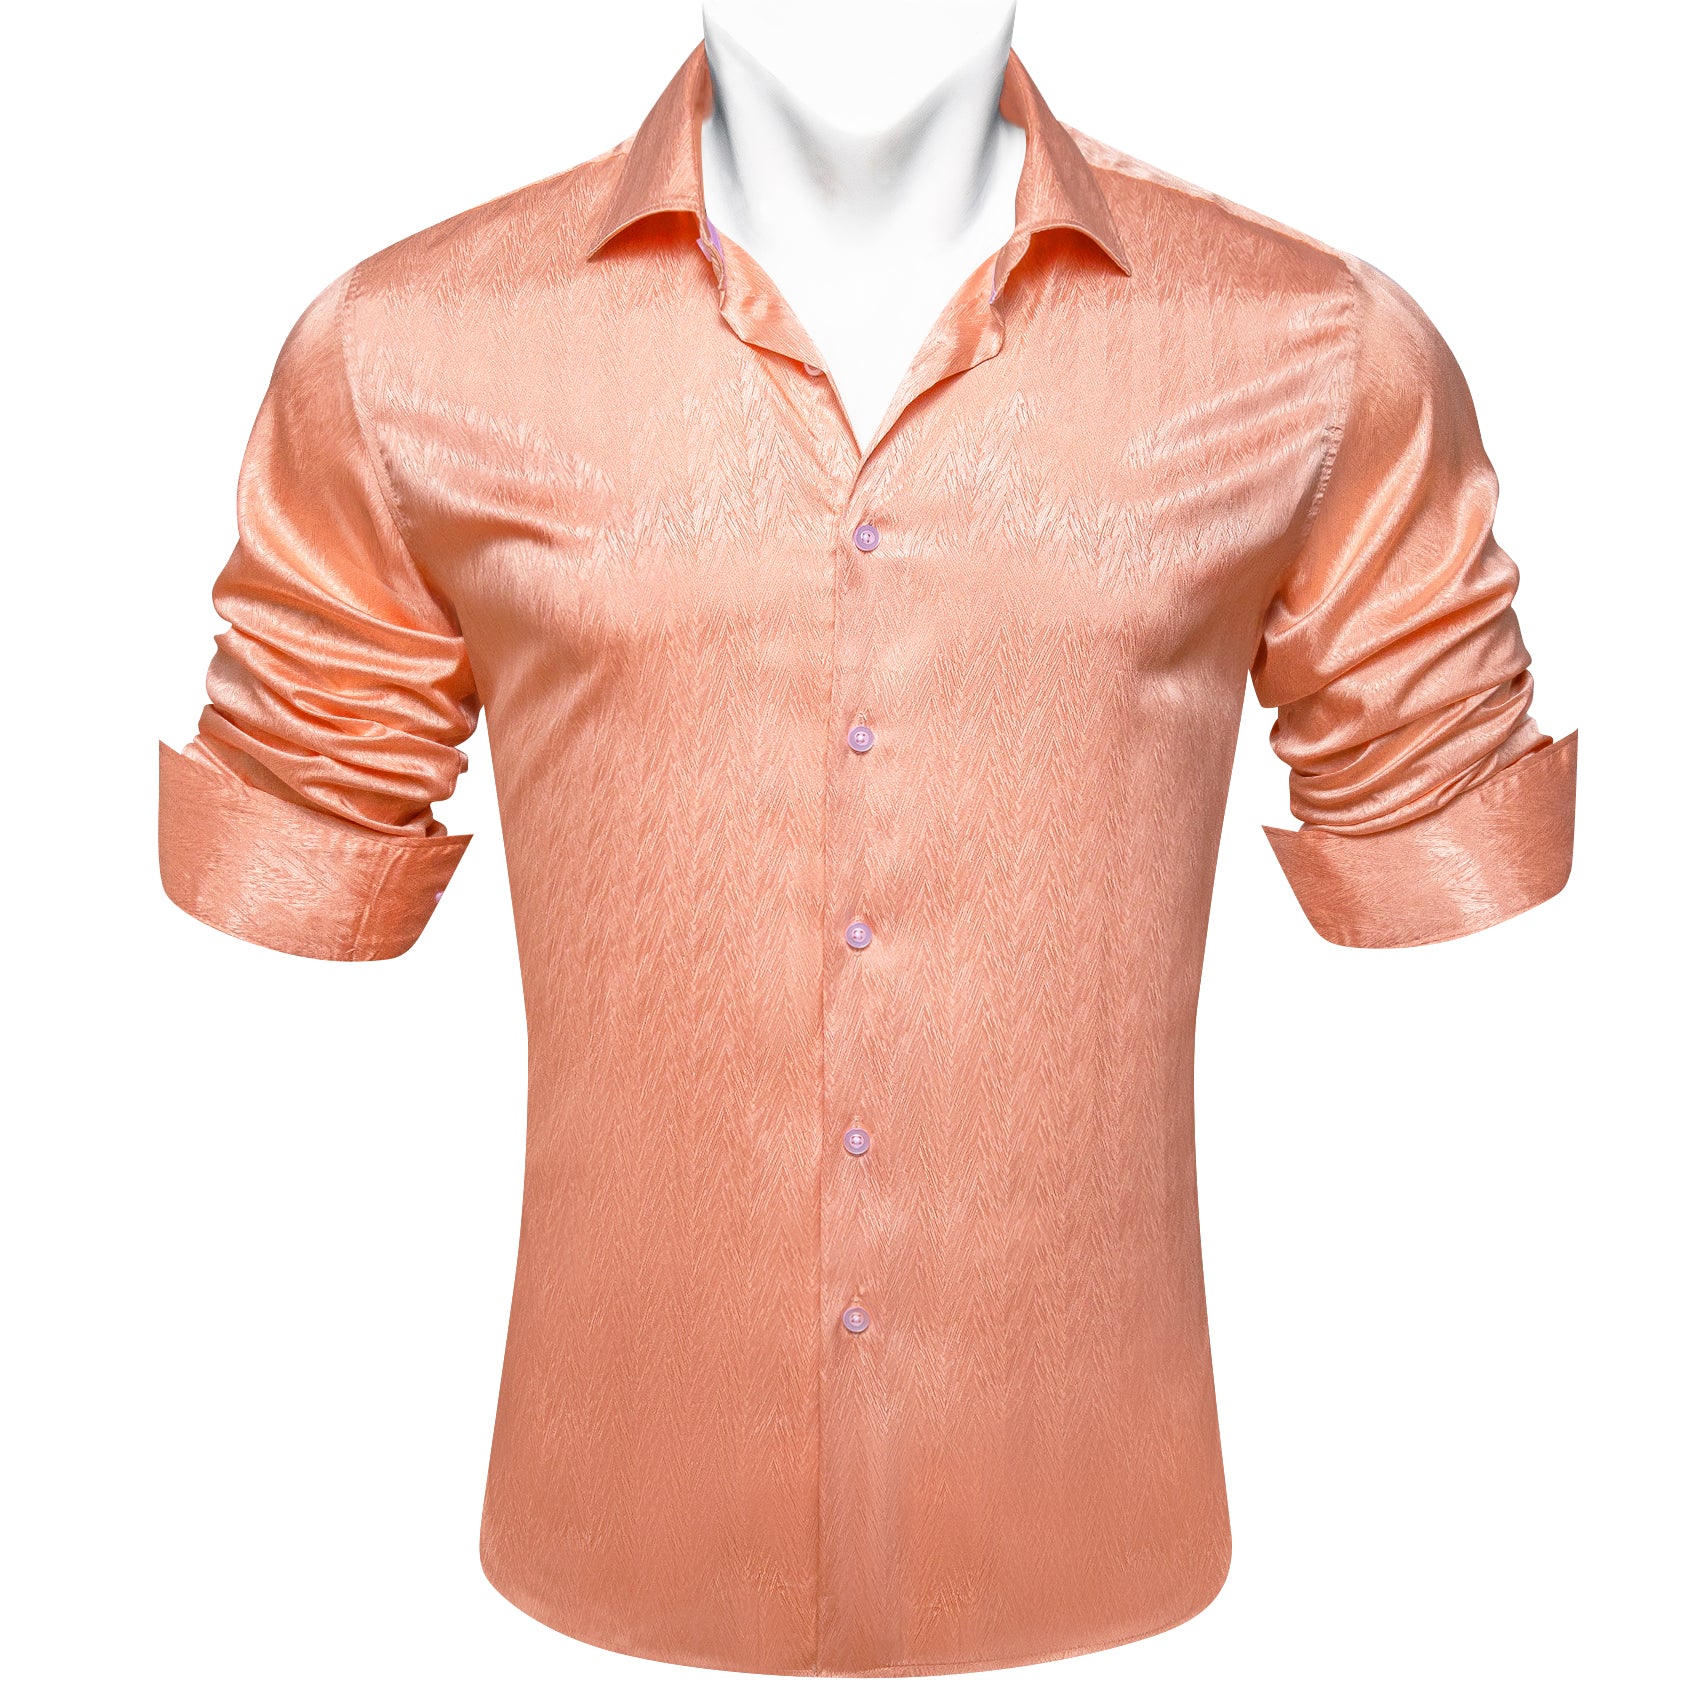 Barry.wang Pale Orange Solid Silk Men's Shirt